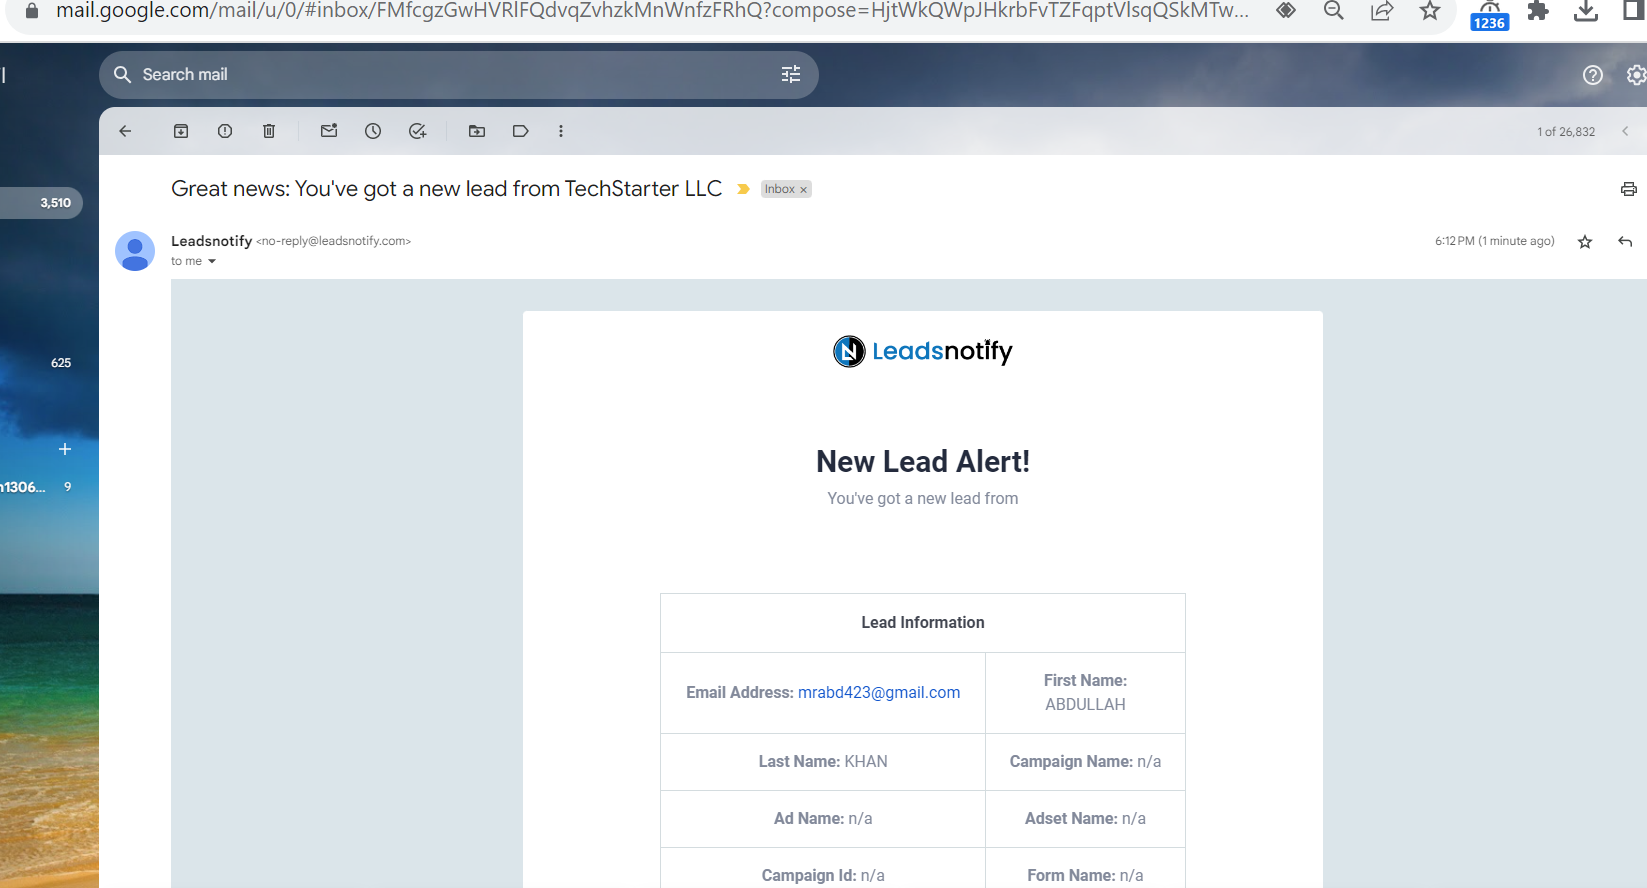 LinkedIn lead alert in Email via Leadsnotify